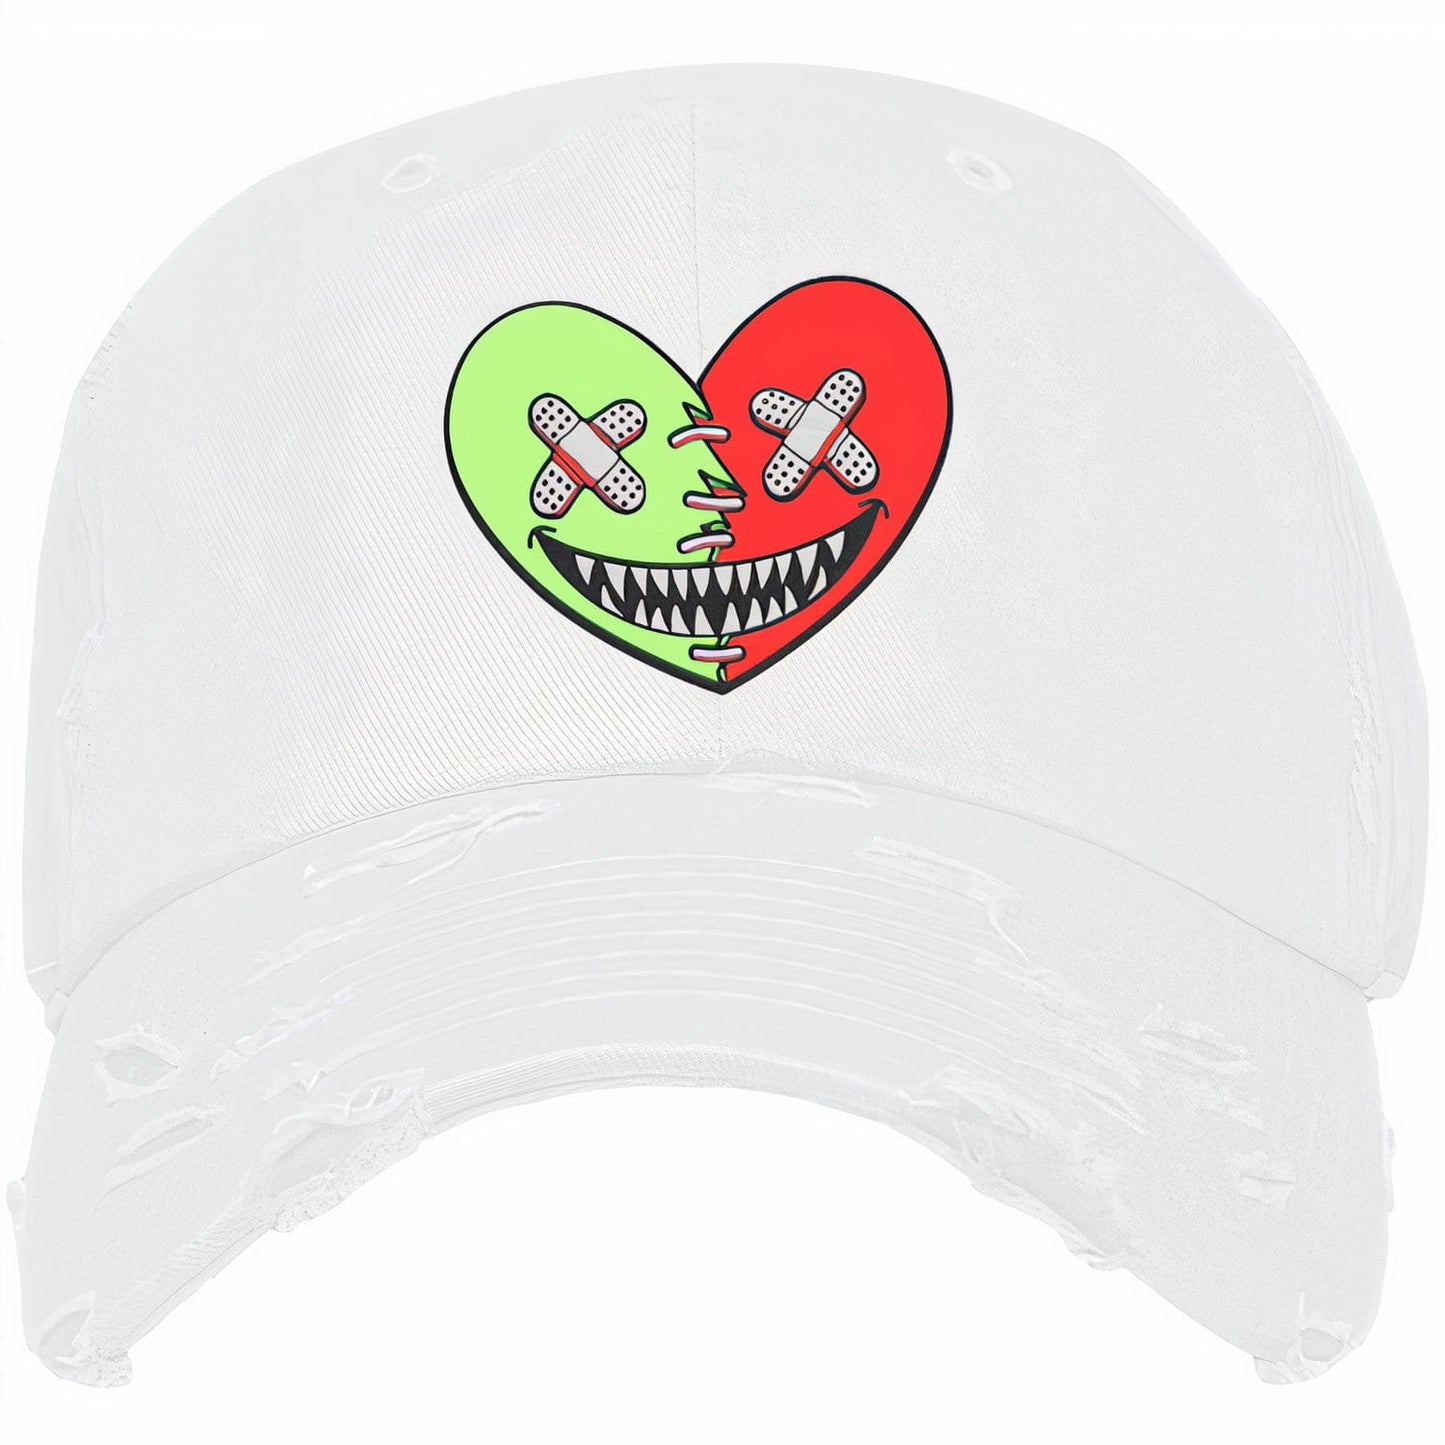 New Balance 9060 Glow Dad Hats - Glow Heart Baws